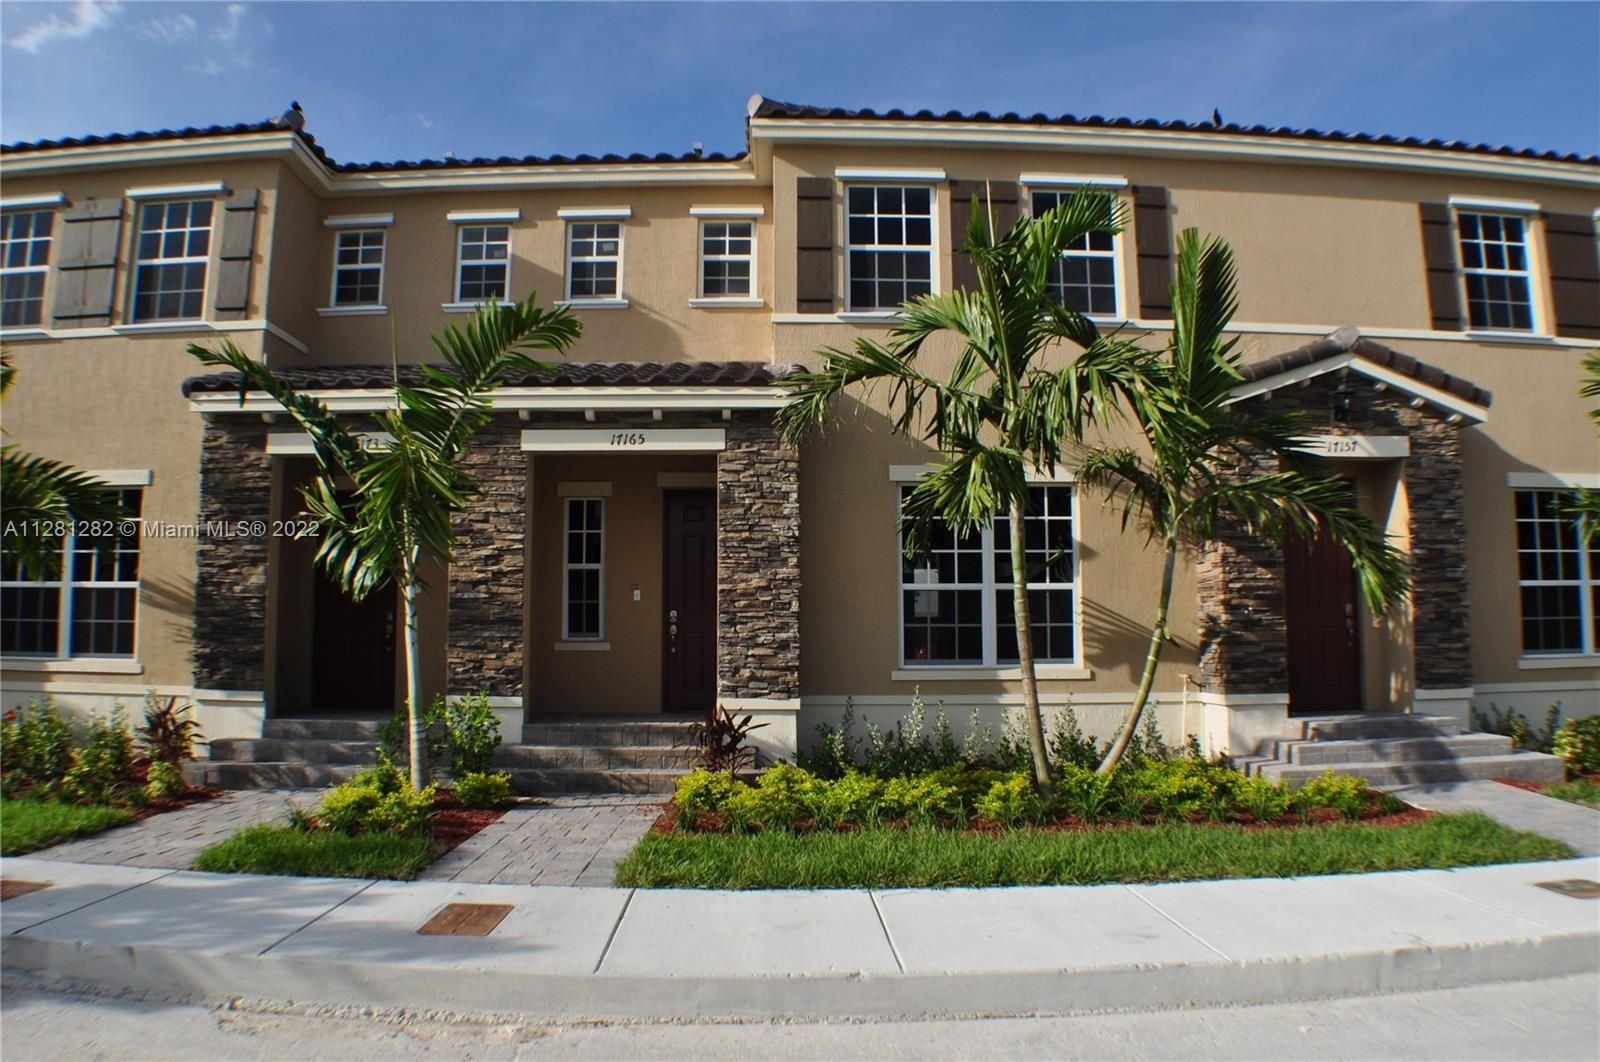 Real estate property located at 17165 94th St #17165, Miami-Dade County, Miami, FL